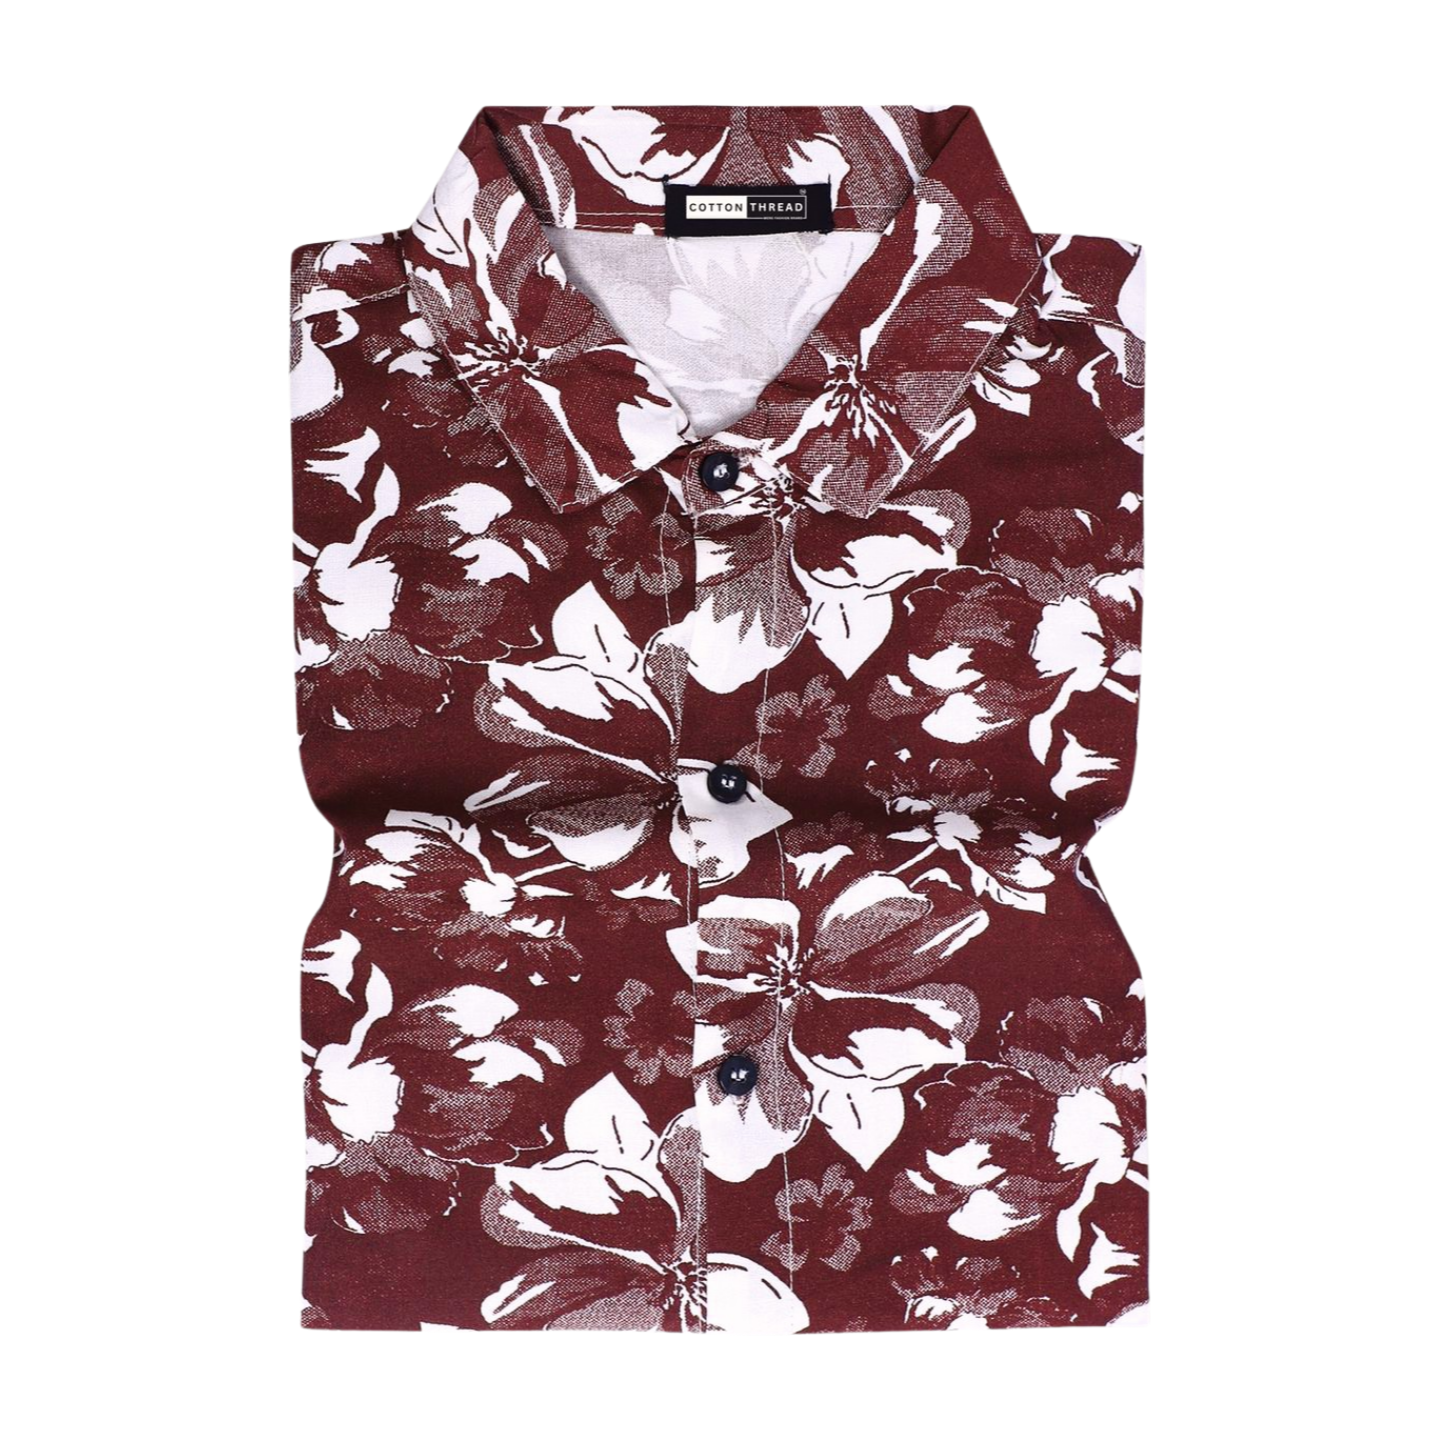 Men's Premium Cotton Half Sleeve Brick Red Floral Printed Shirt By Cotton Thread (PRT-088)